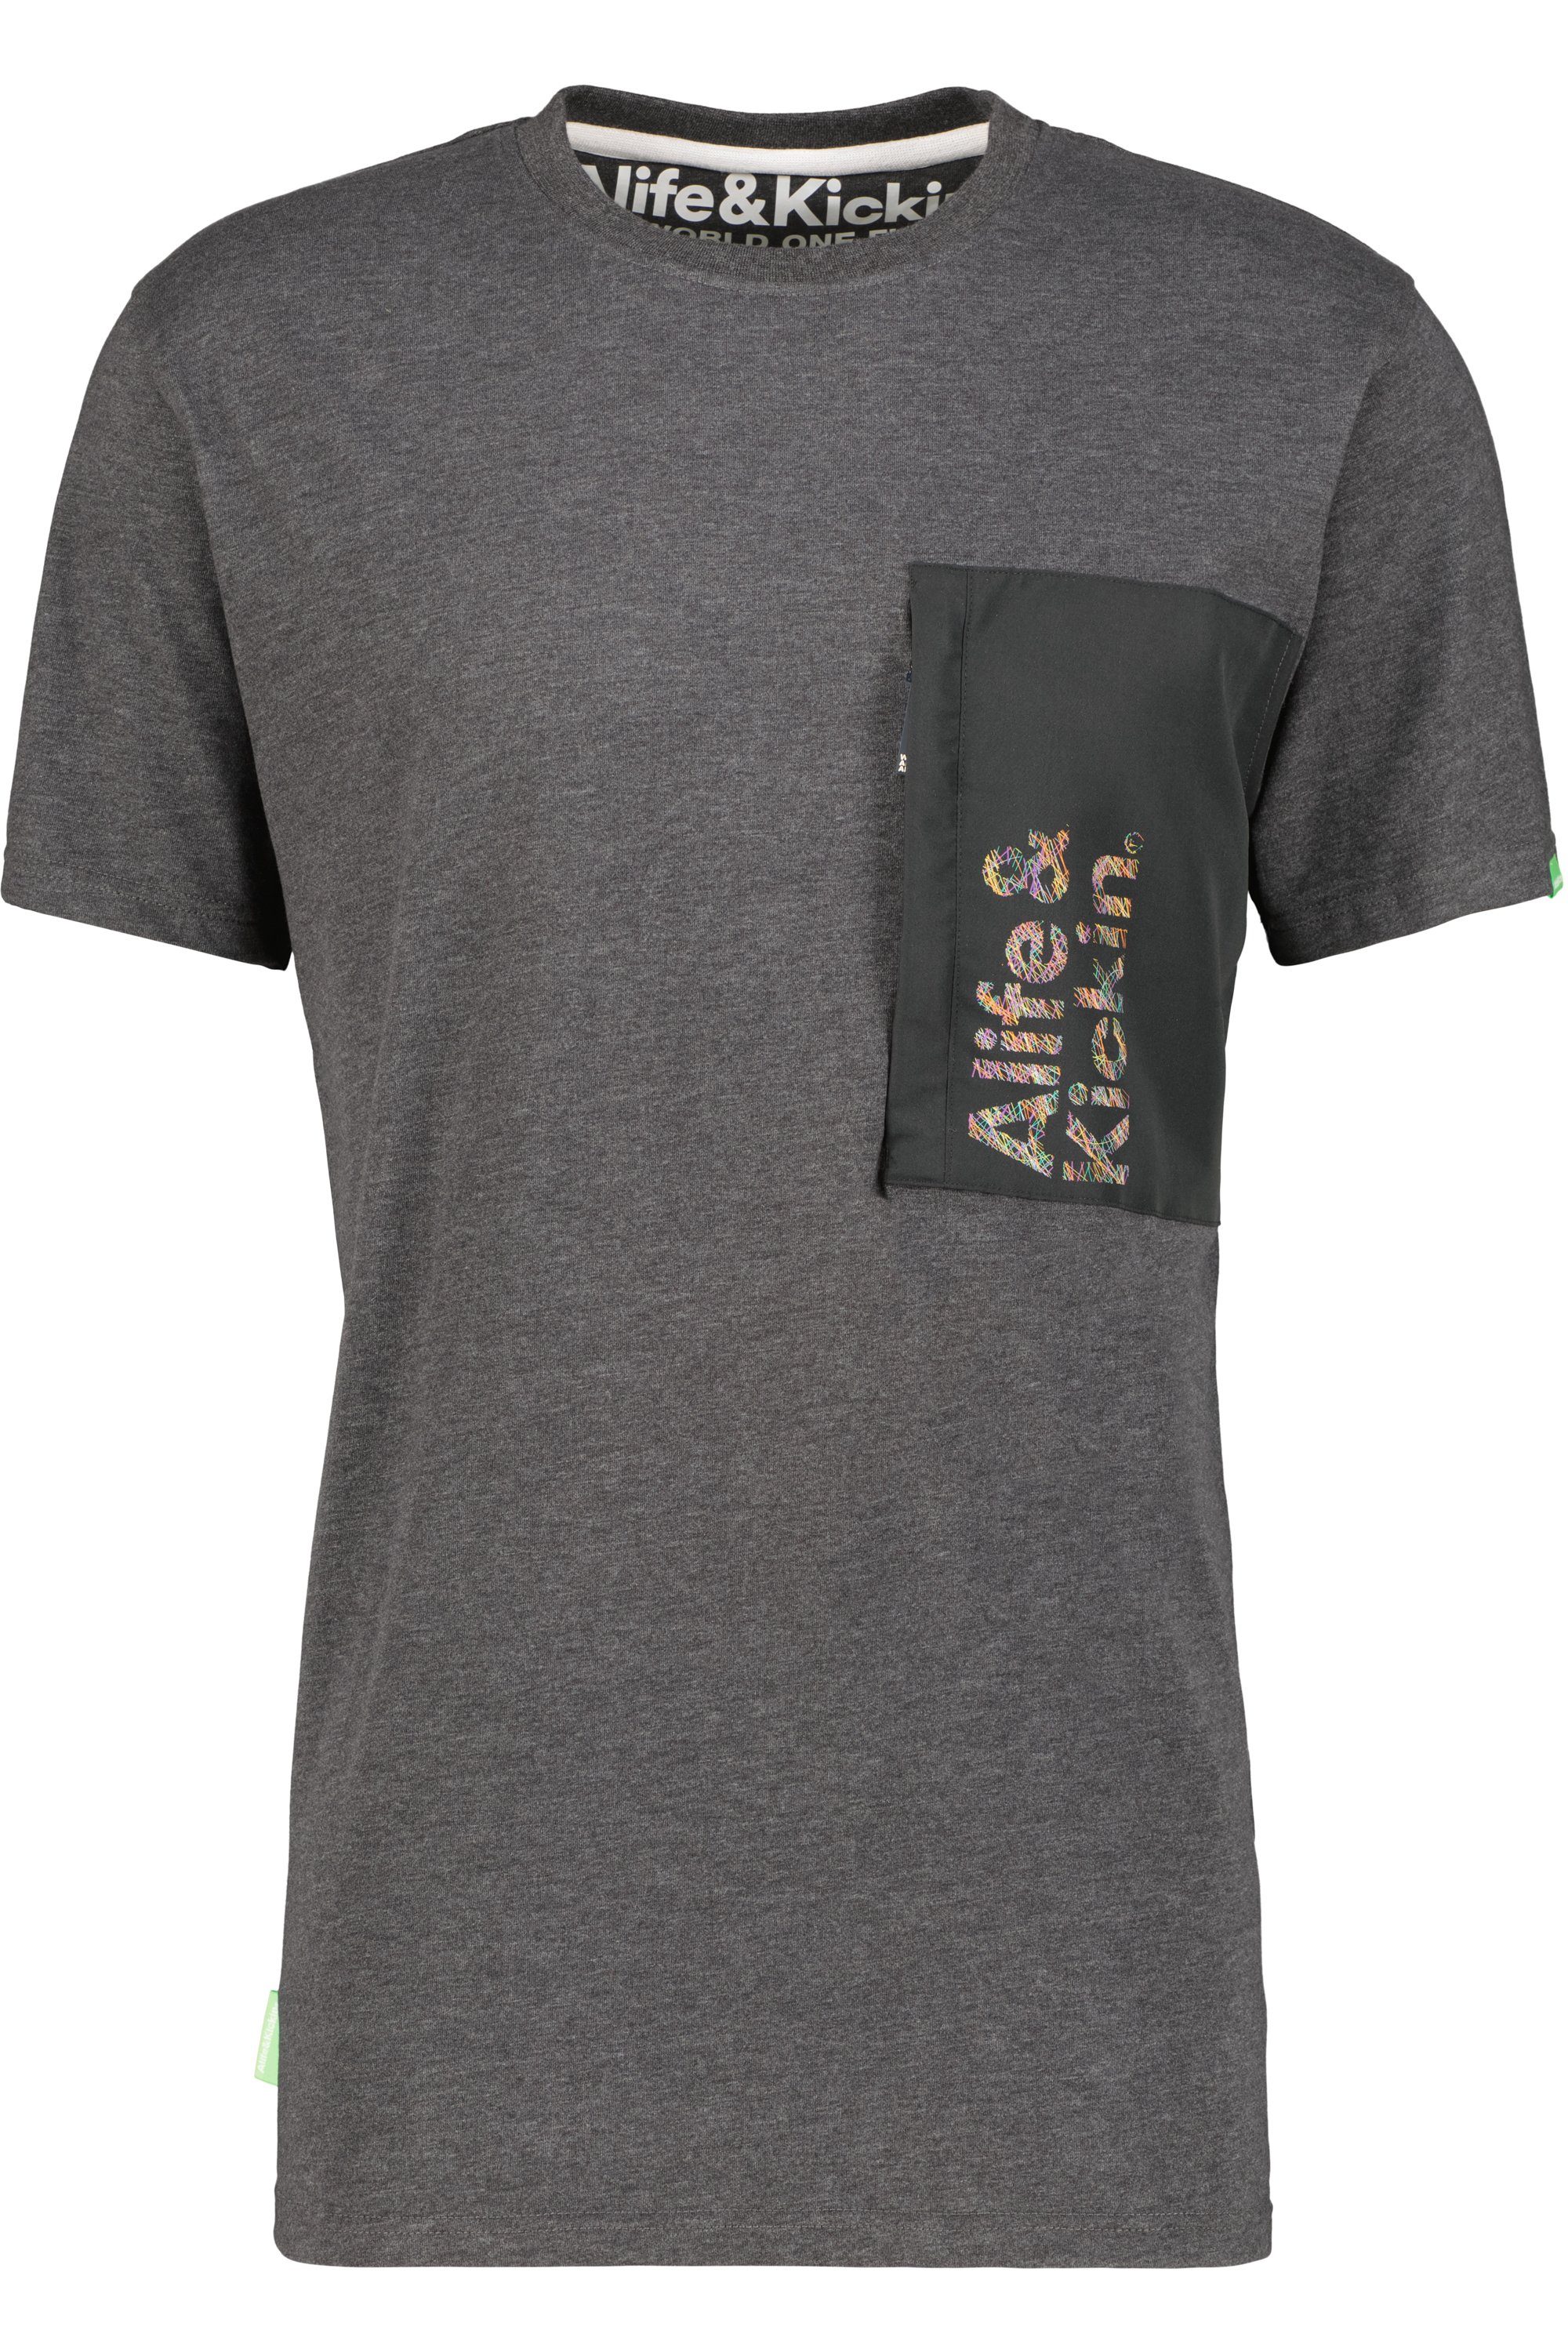 T-Shirt Herren & Alife Kickin Shirt T-Shirt moonless RossAK